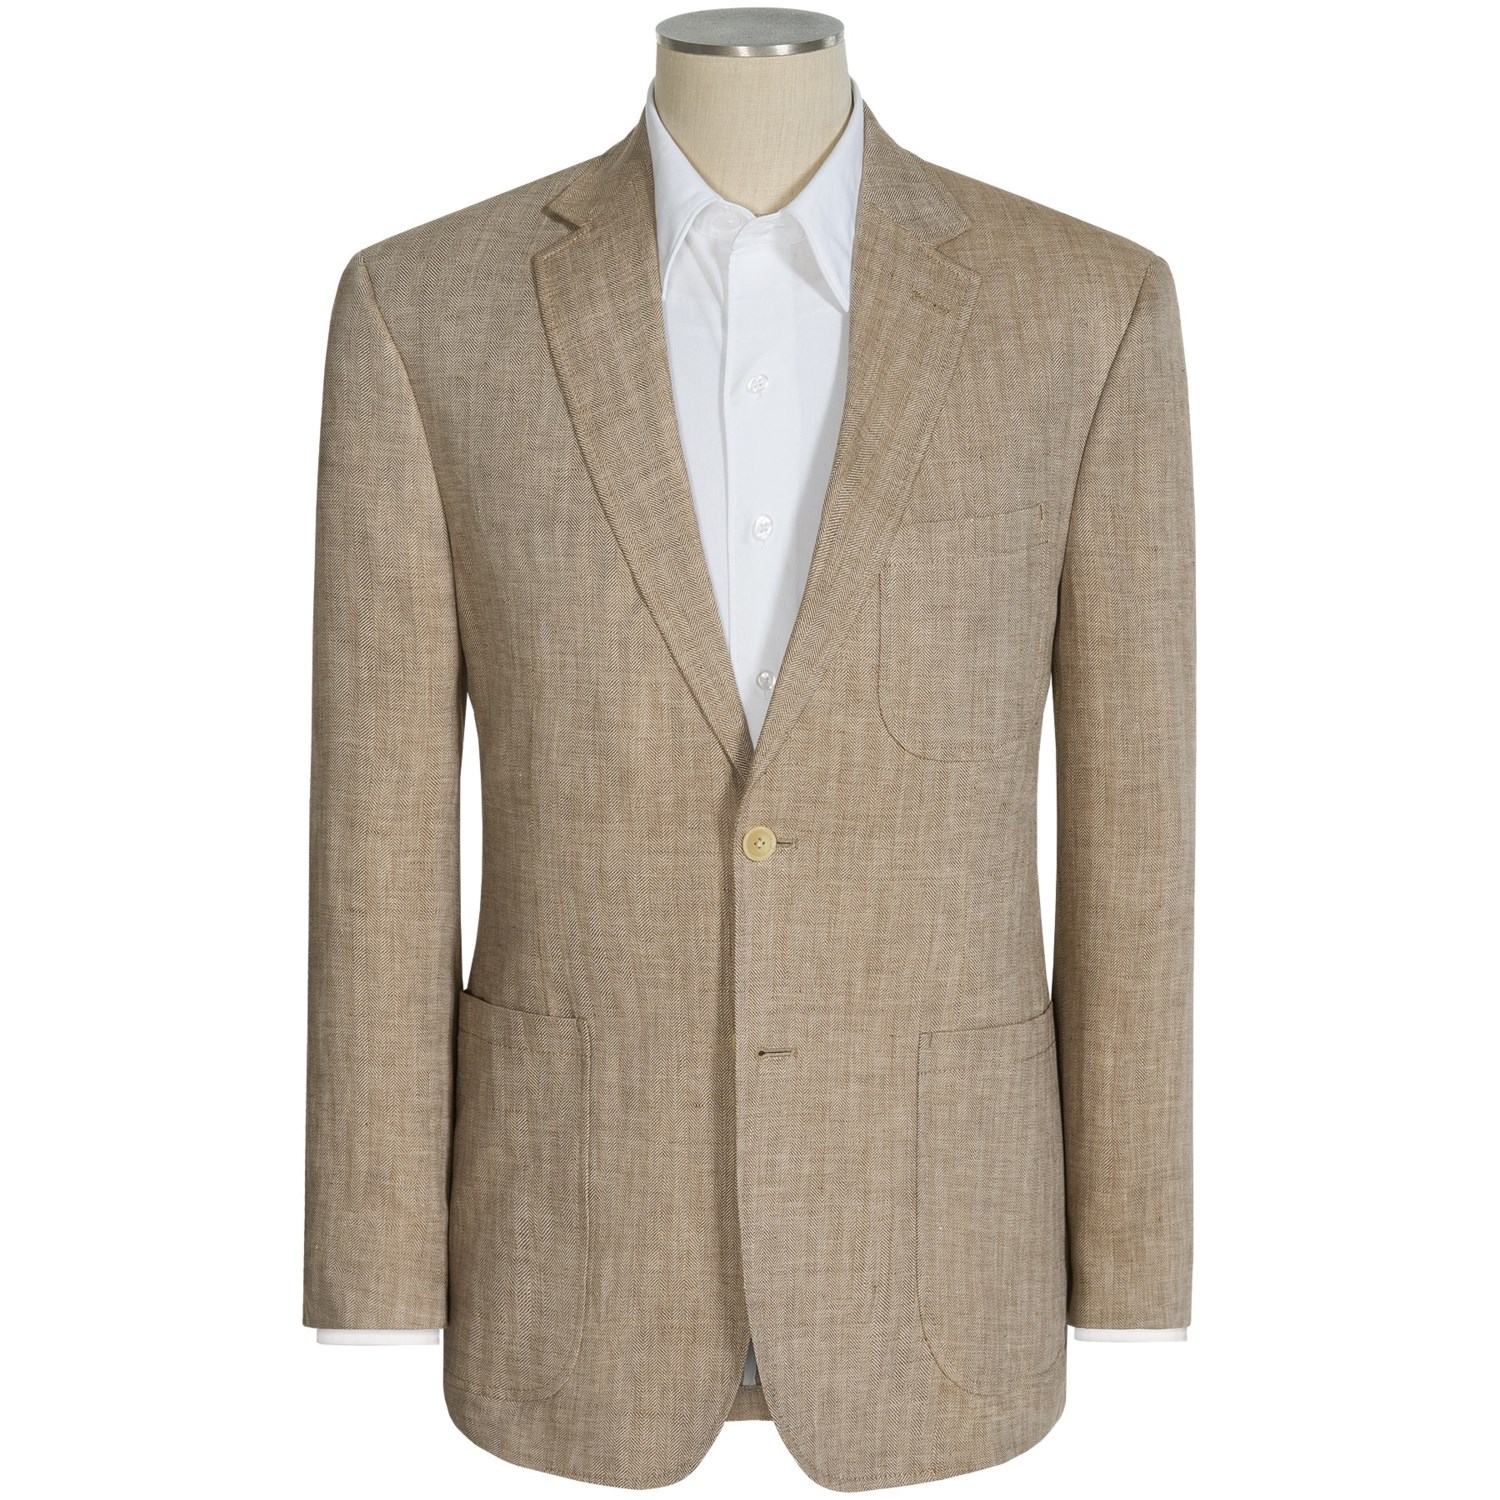 Kroon Earnest Herringbone Sport Coat (For Men) 9990J - Save 72%